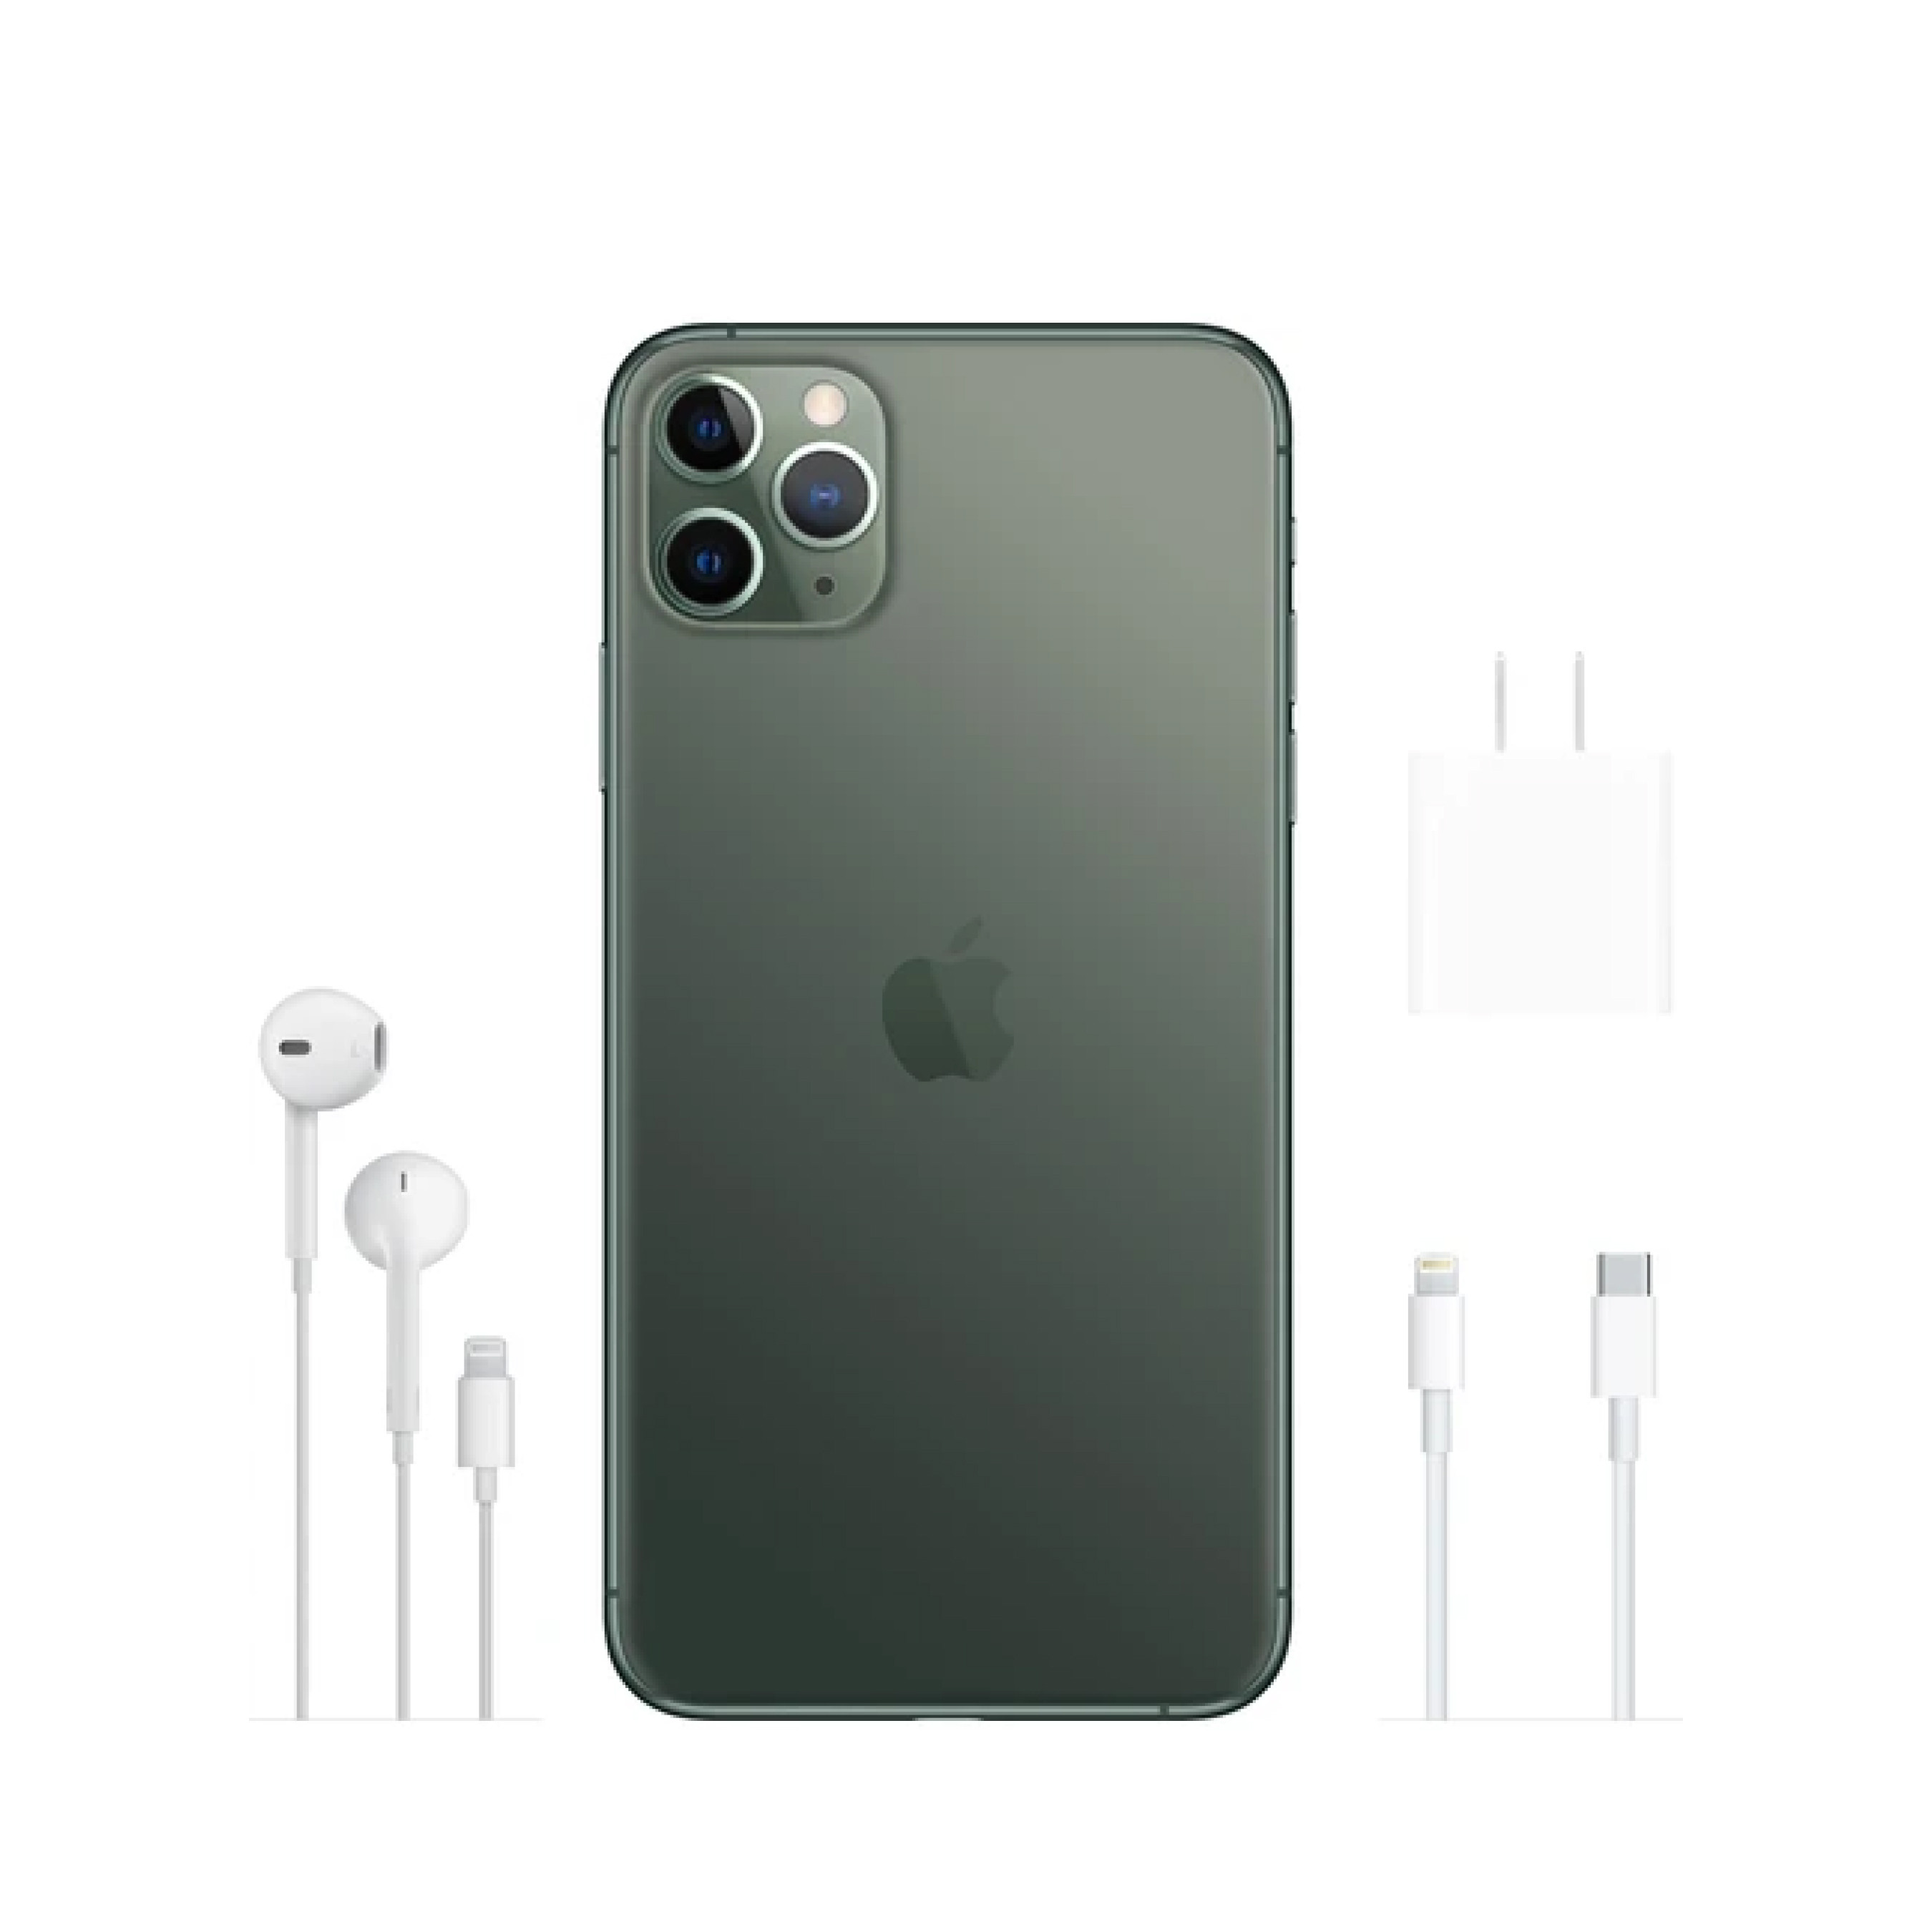 Apple iPhone 11 Pro Max 256Gb - Green eSIM